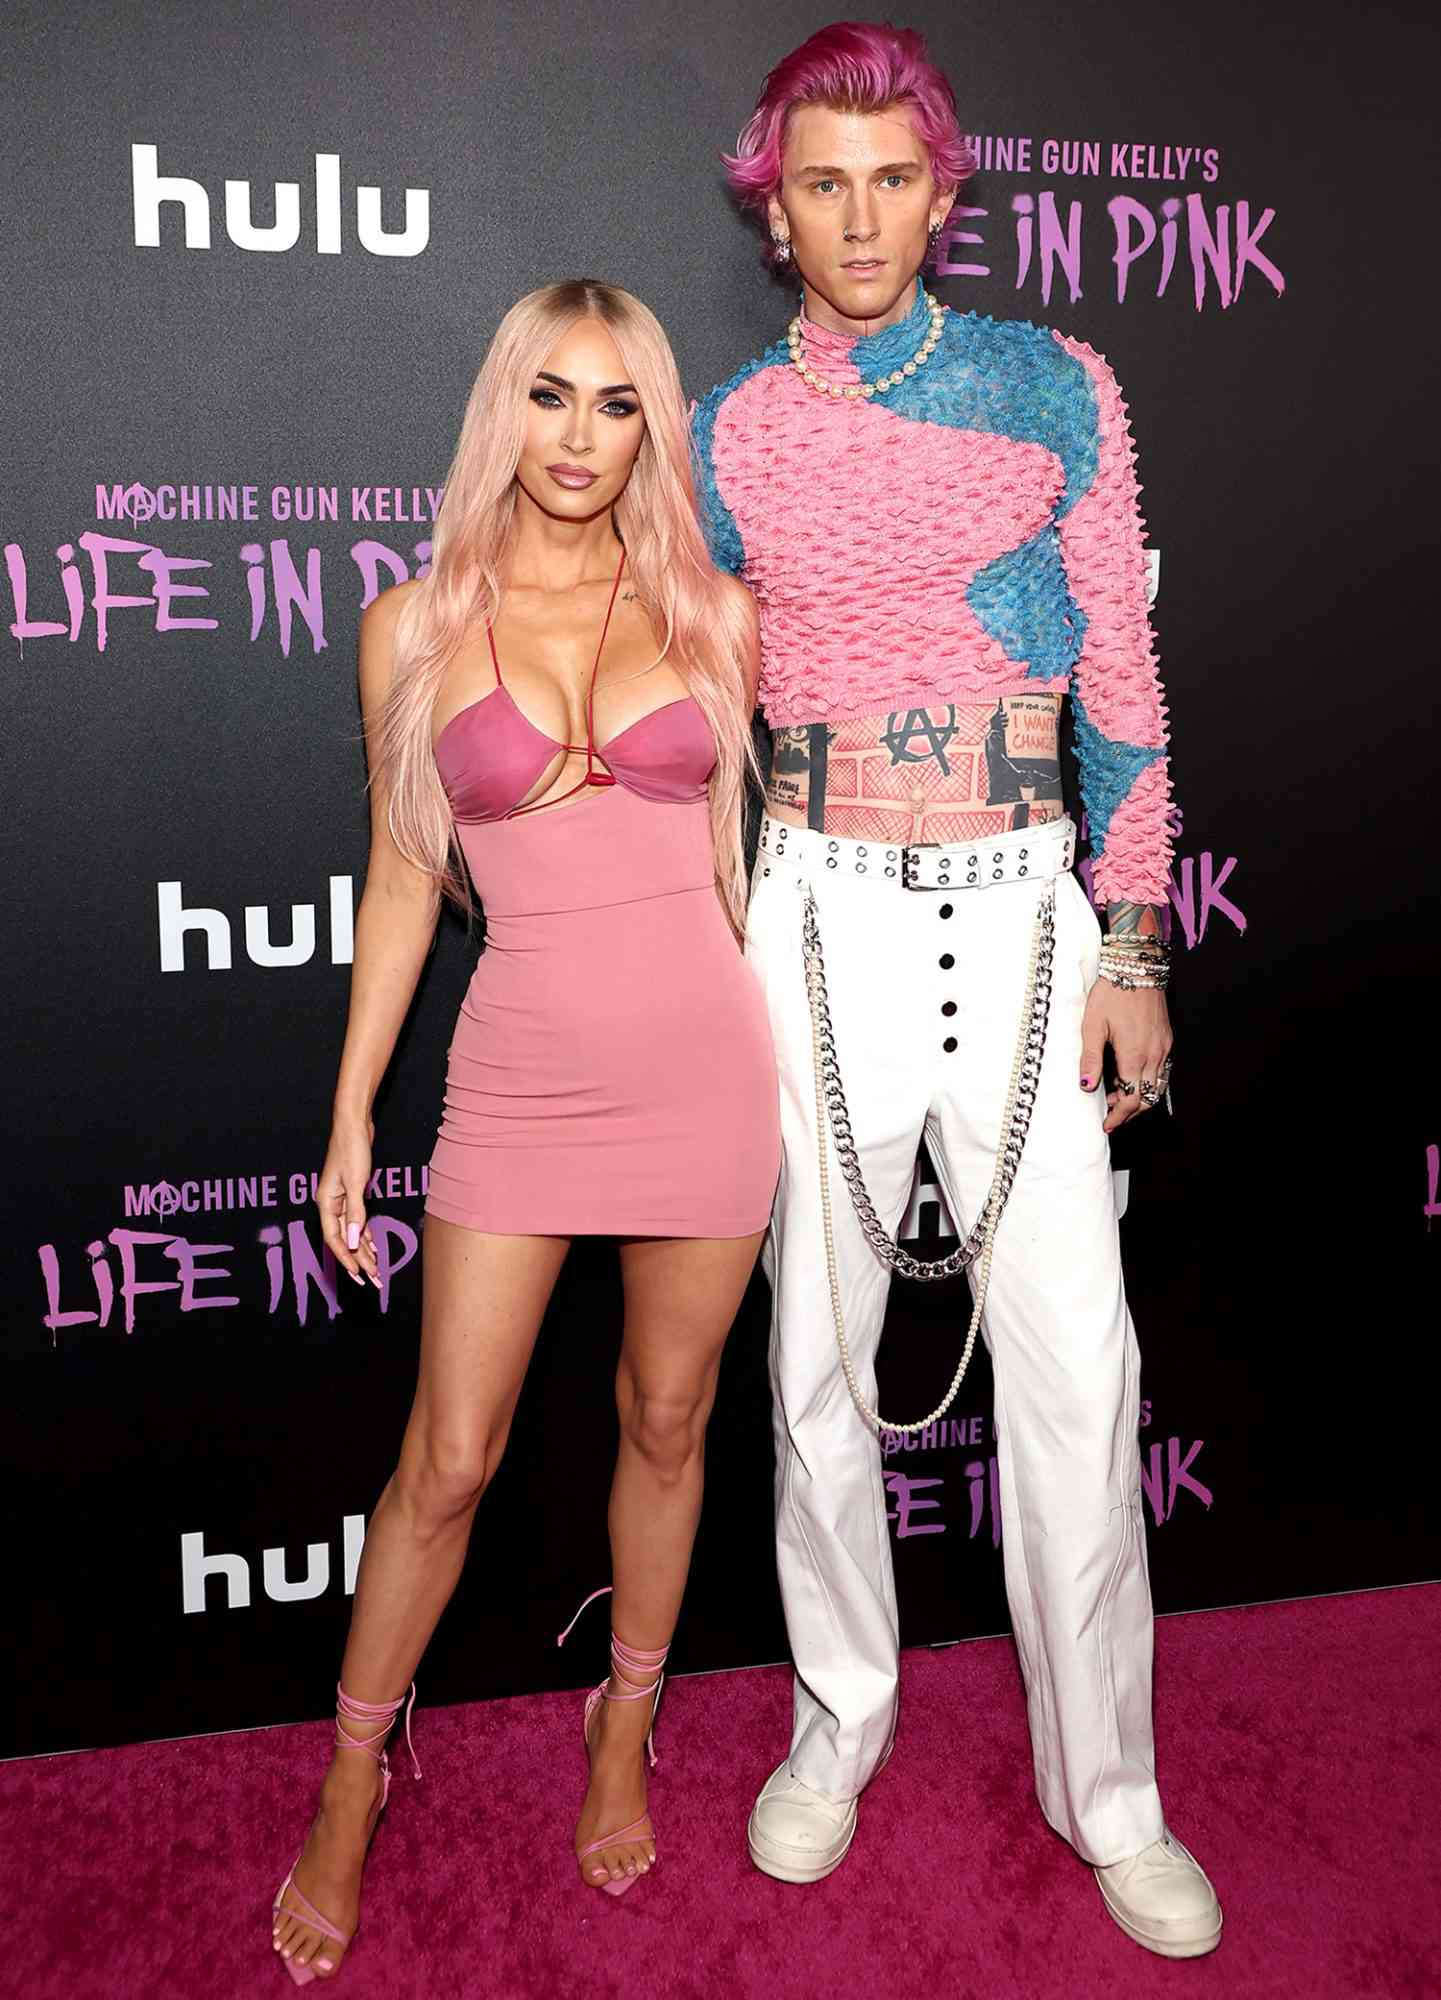 Megan Fox and Colson Baker "Machine Gun Kelly" attends "Machine Gun Kelly's Life In Pink" premiere